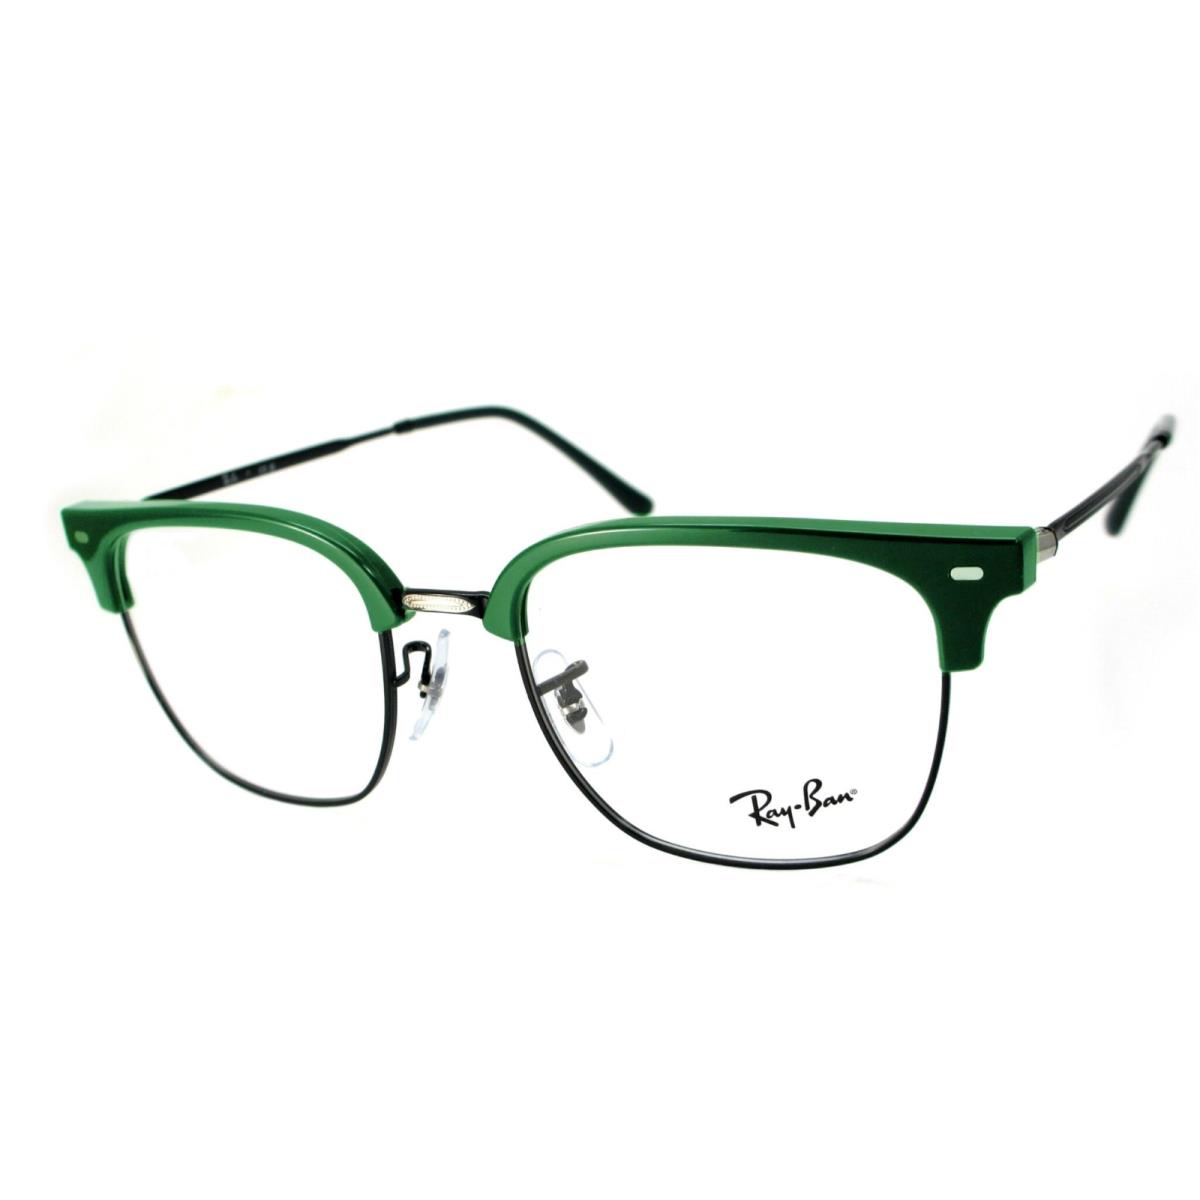 Ray-ban Clubmaster Eyeglasses RB 7216 8208 51-20 Black Green Frames - Frame: Black & Green